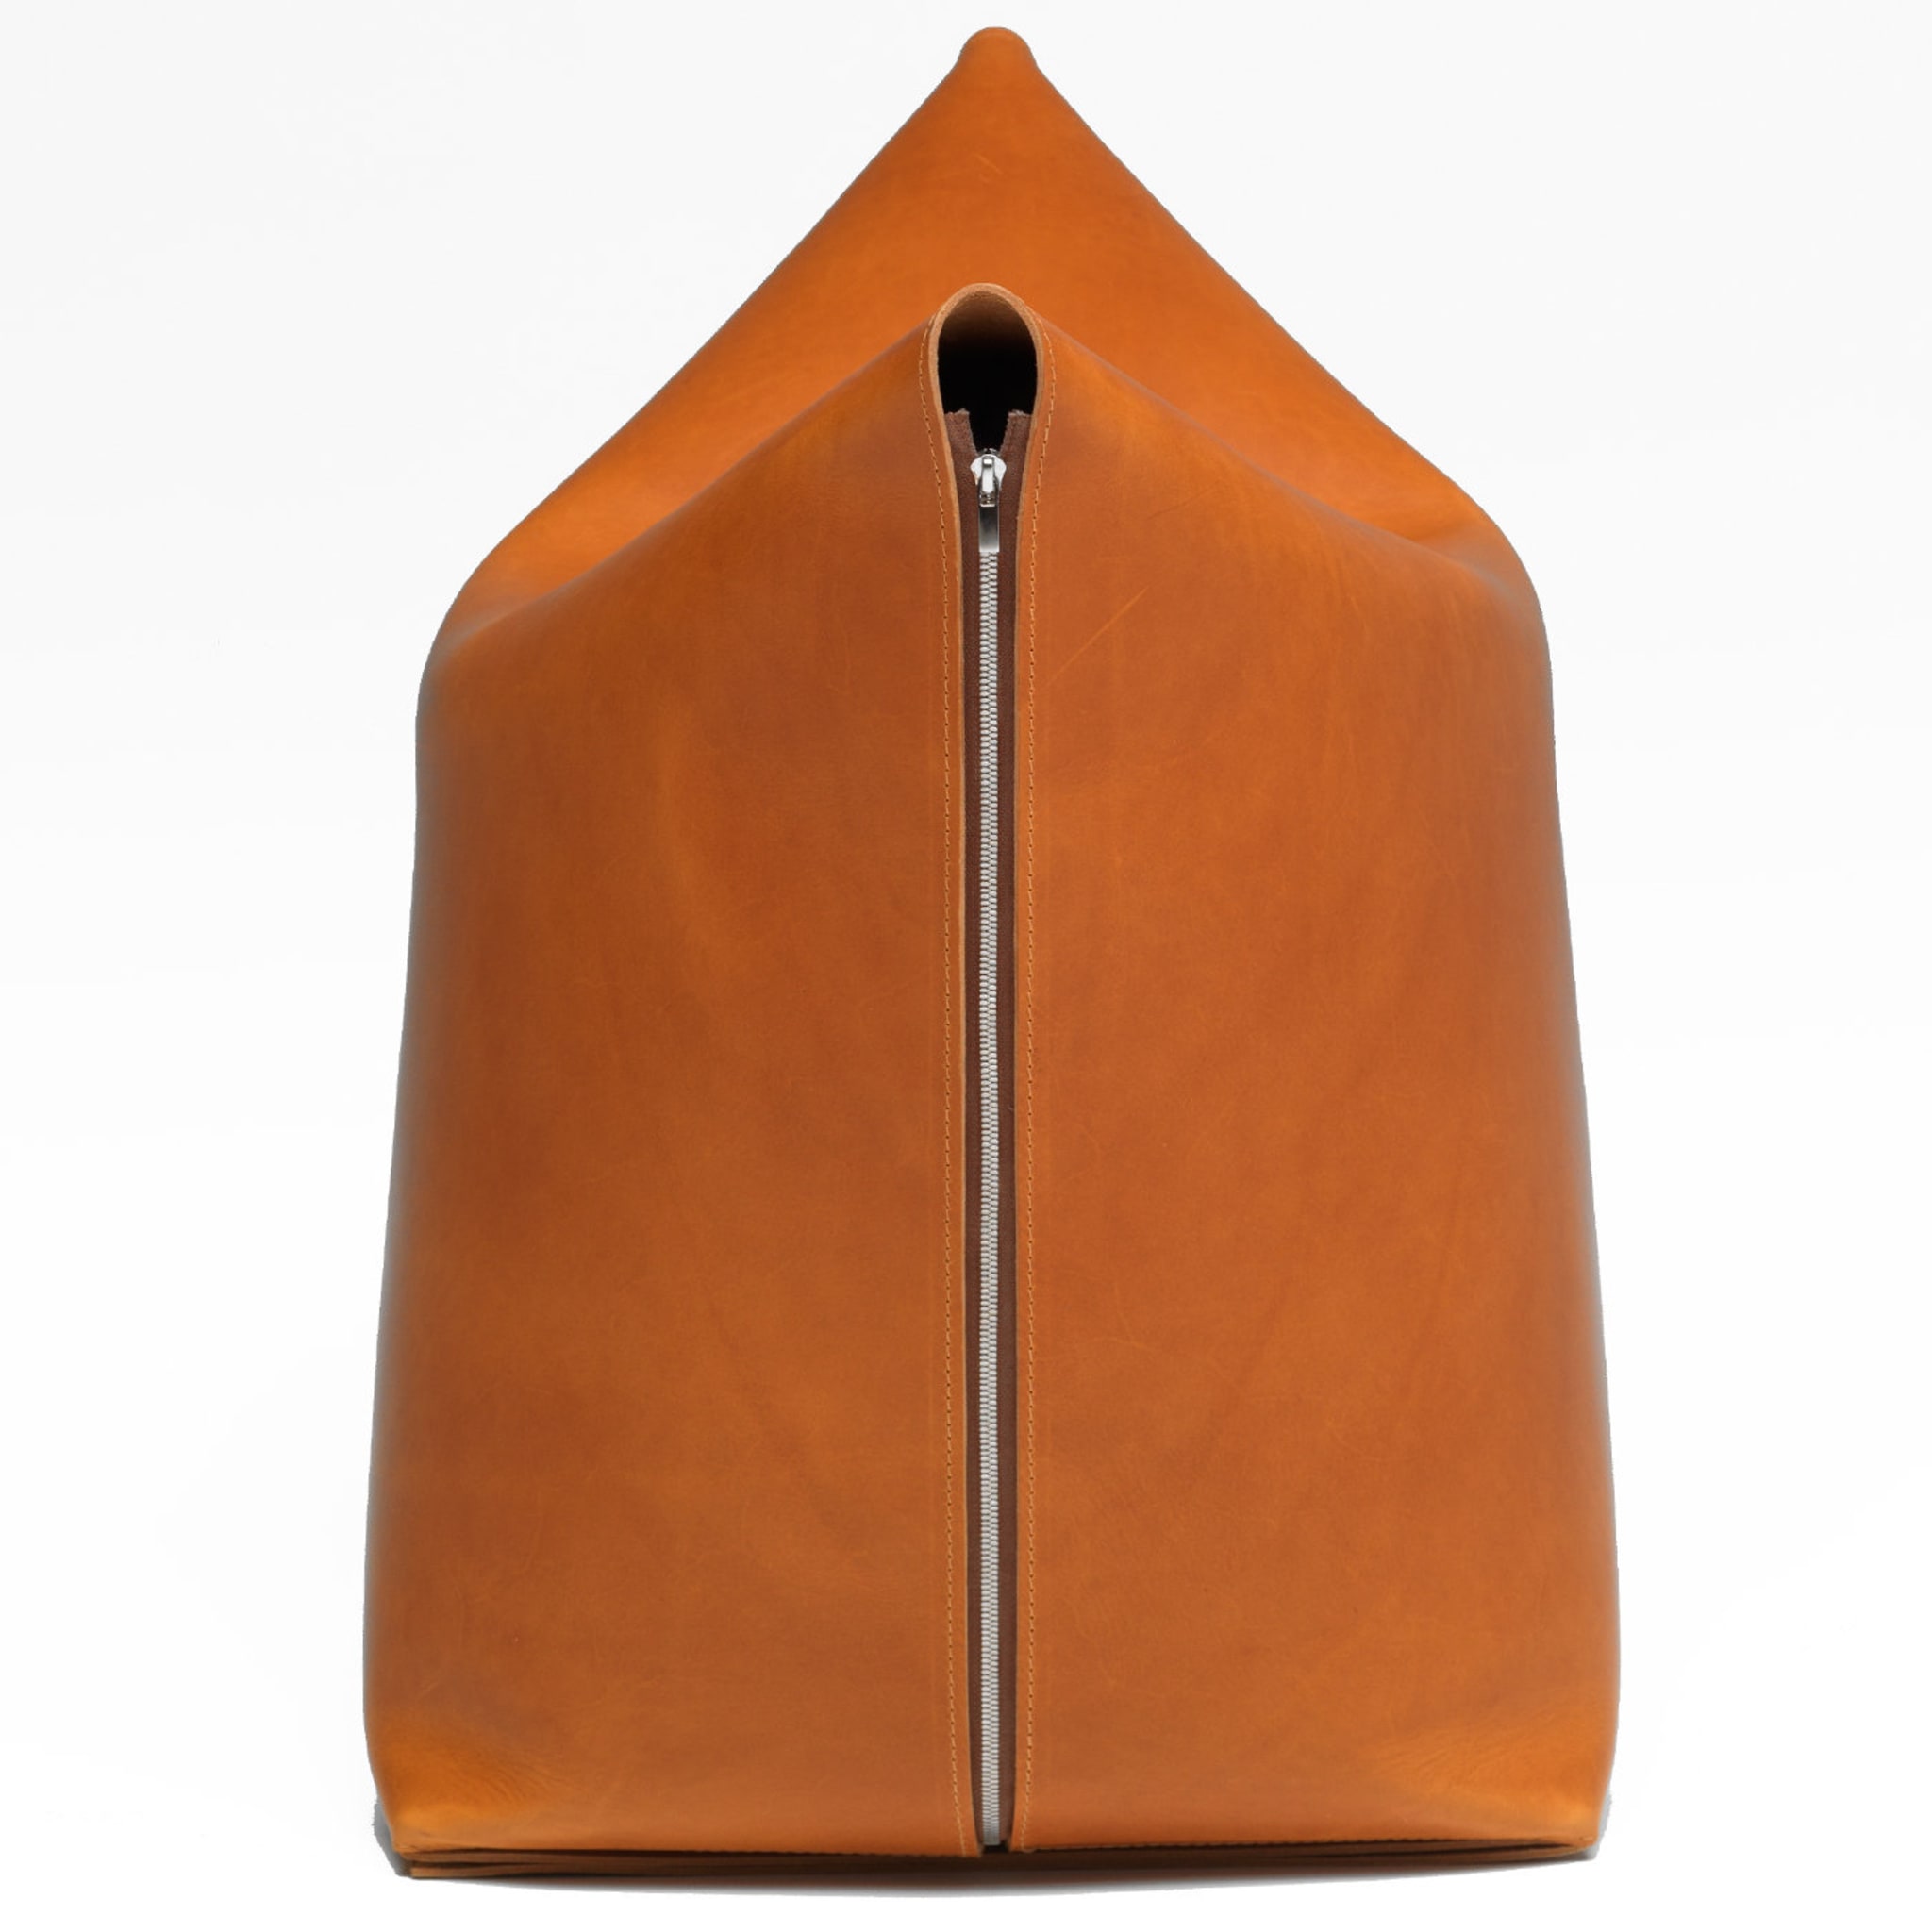 Mao Orange Leather Bag Chair by Viola Tonucci - Alternative view 1